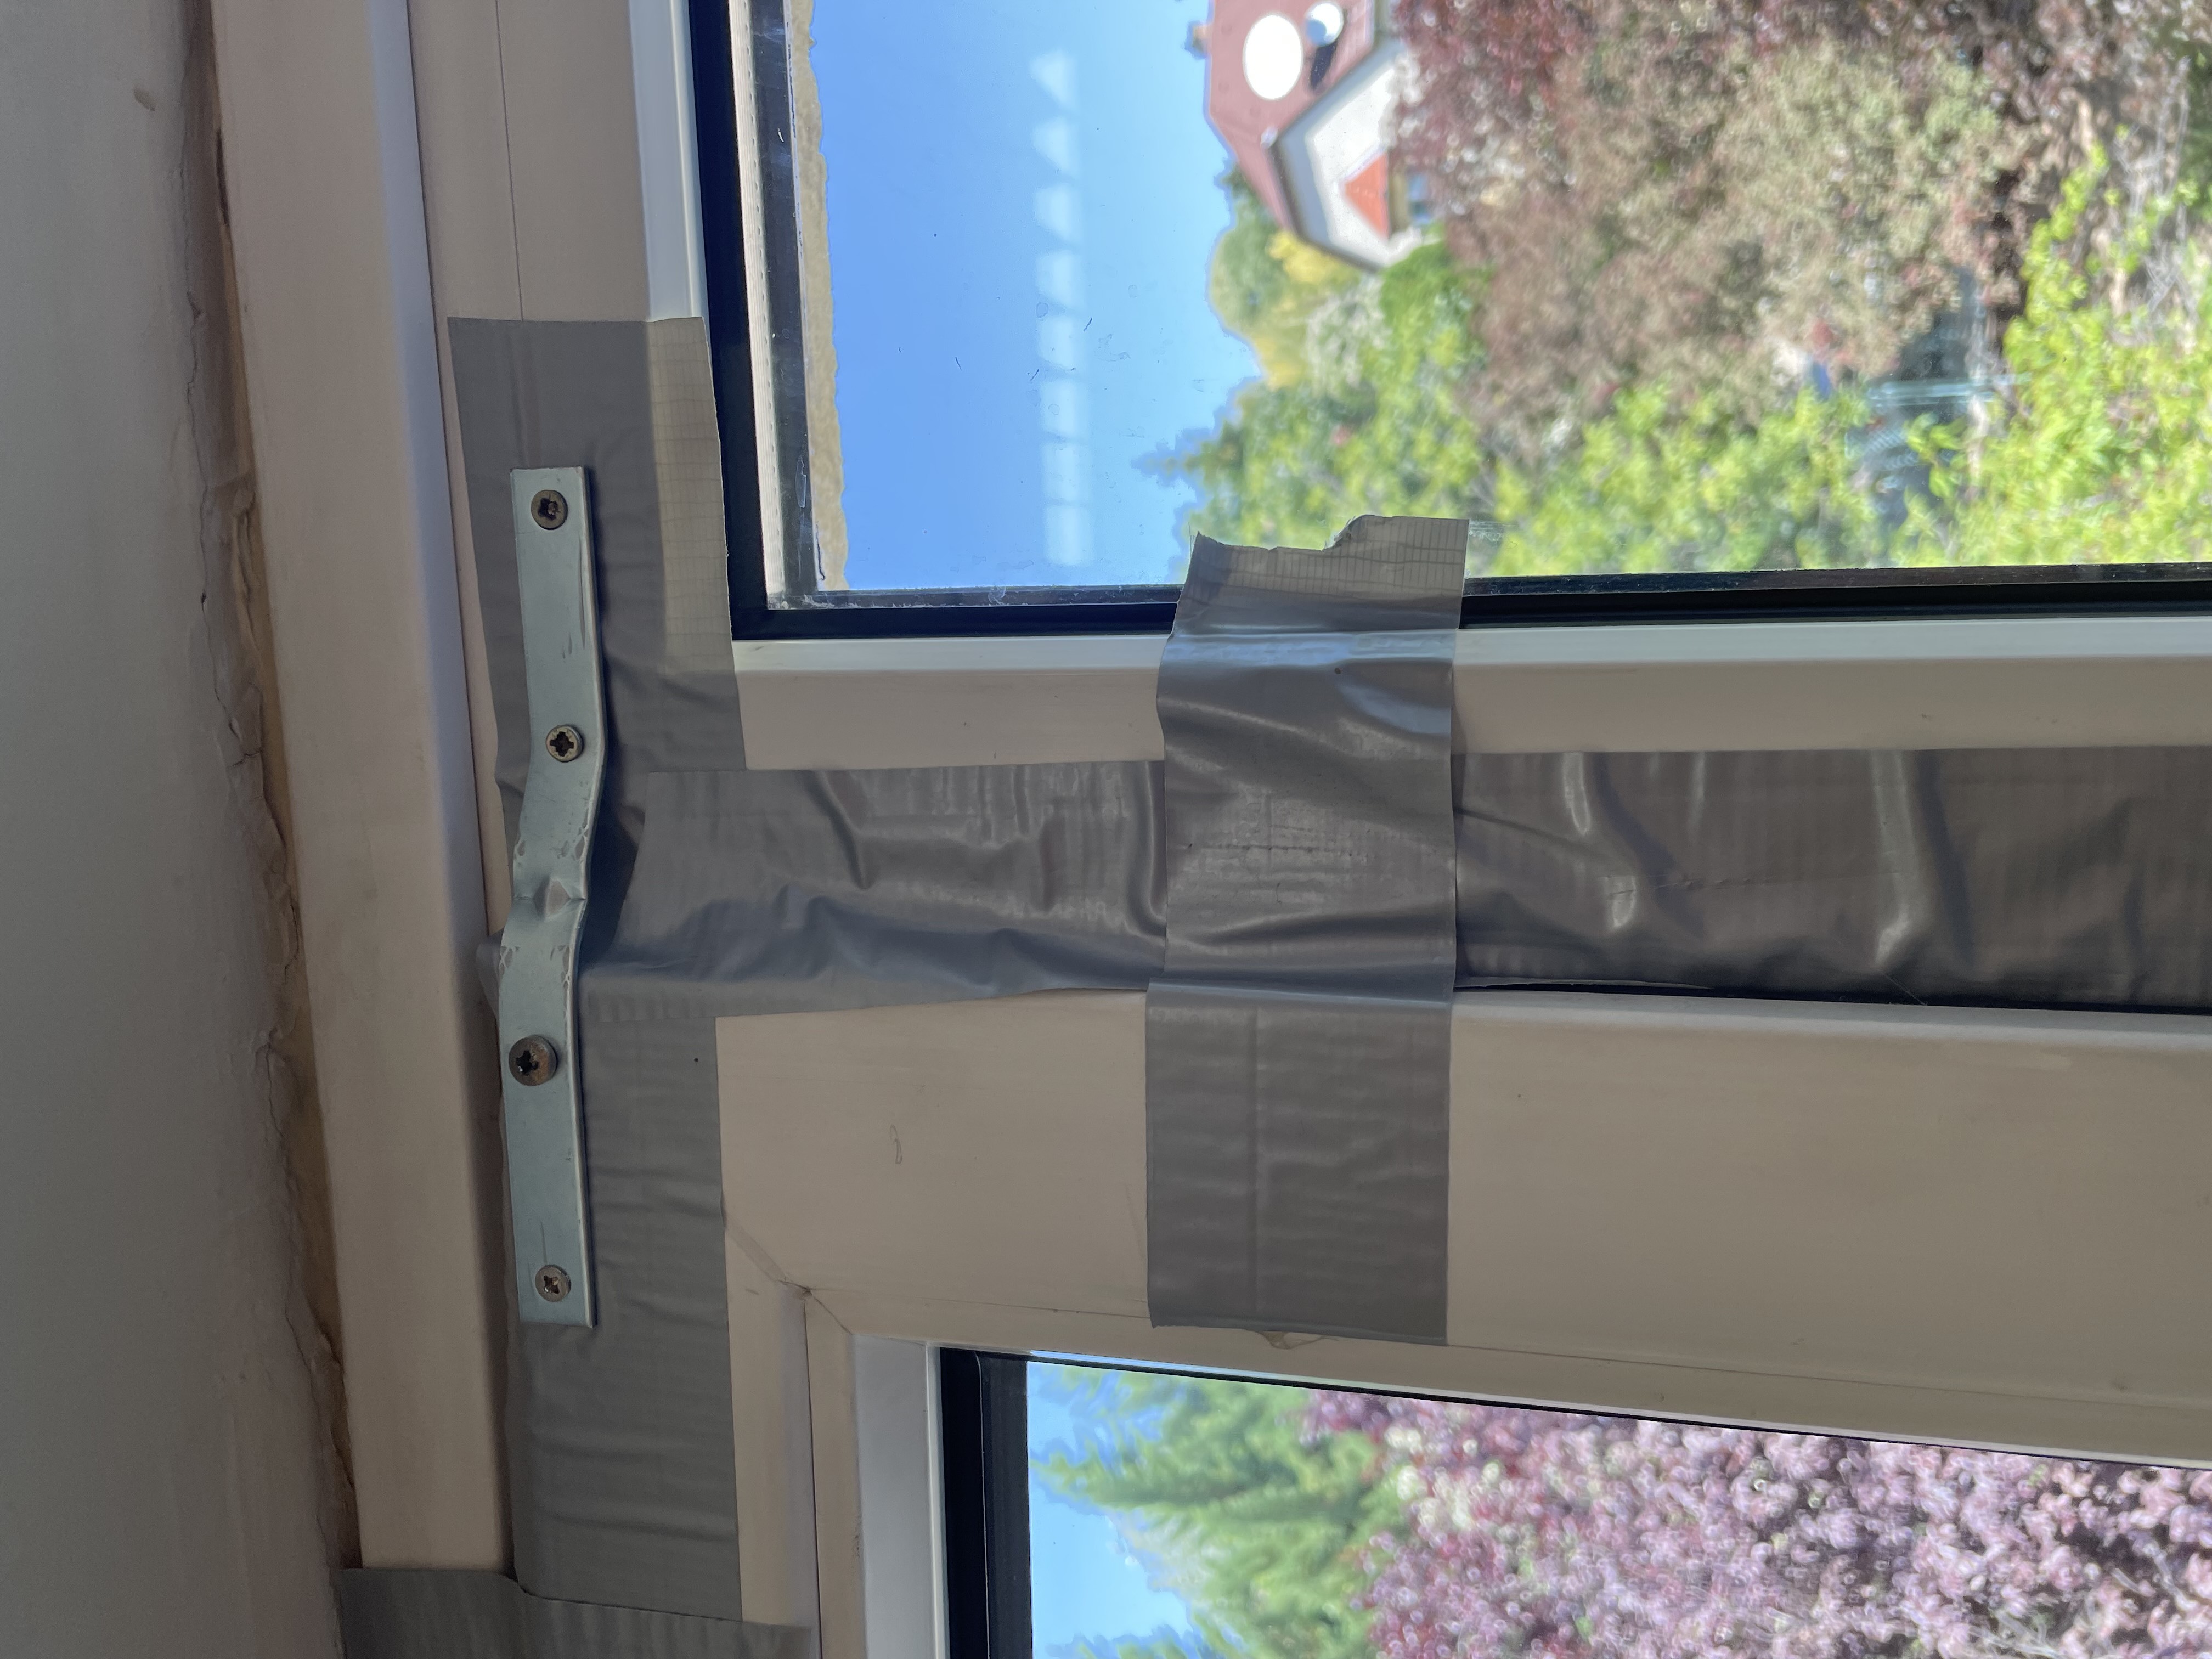 műanyag ablak duct tape